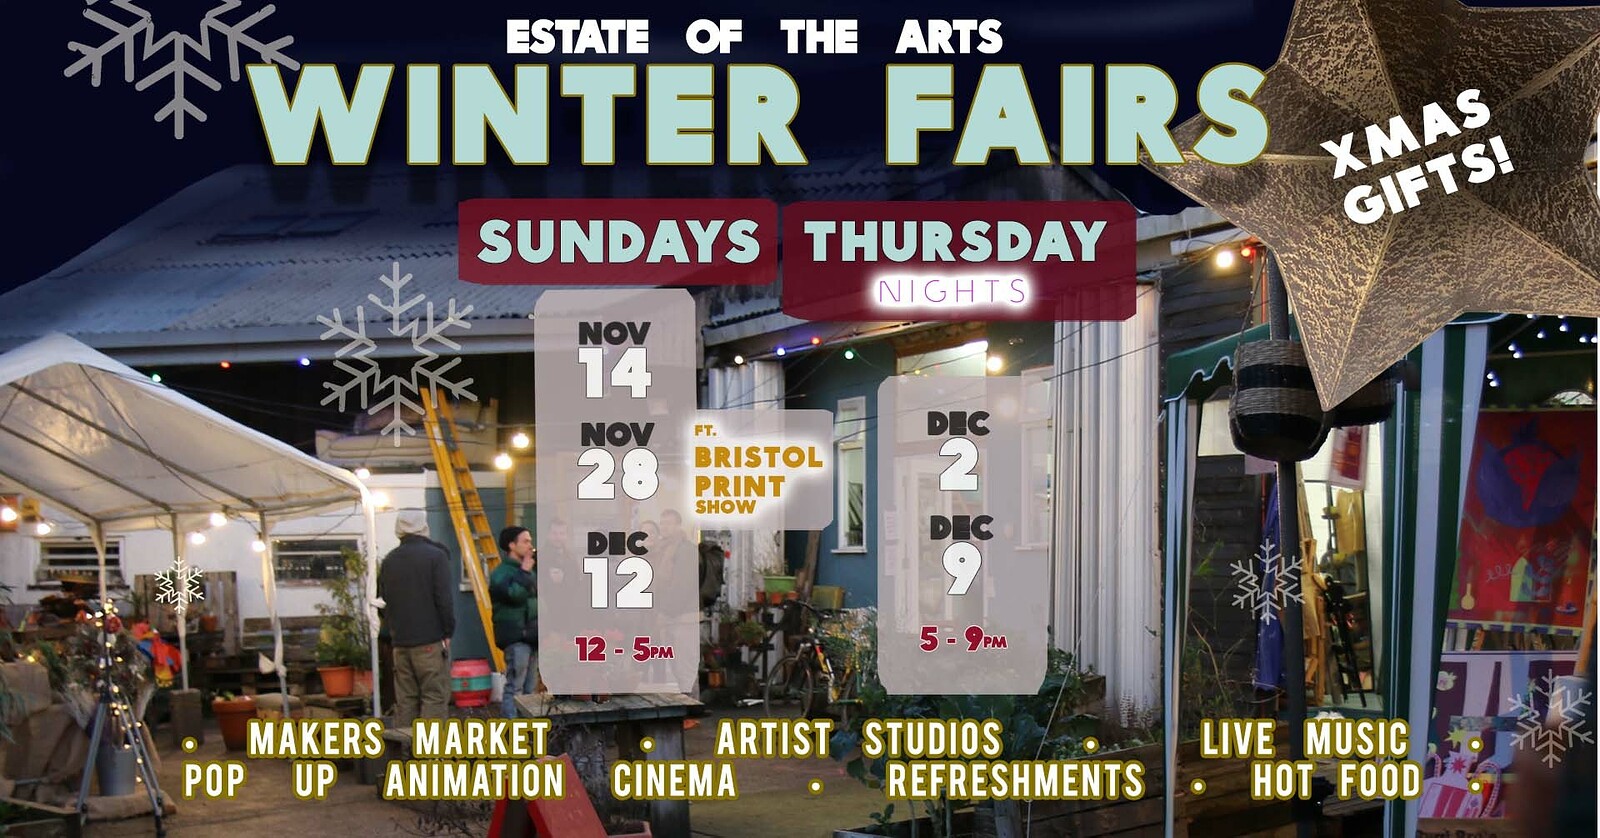 Winter Fair: Makers Market & Open Studios at Estate of the Arts